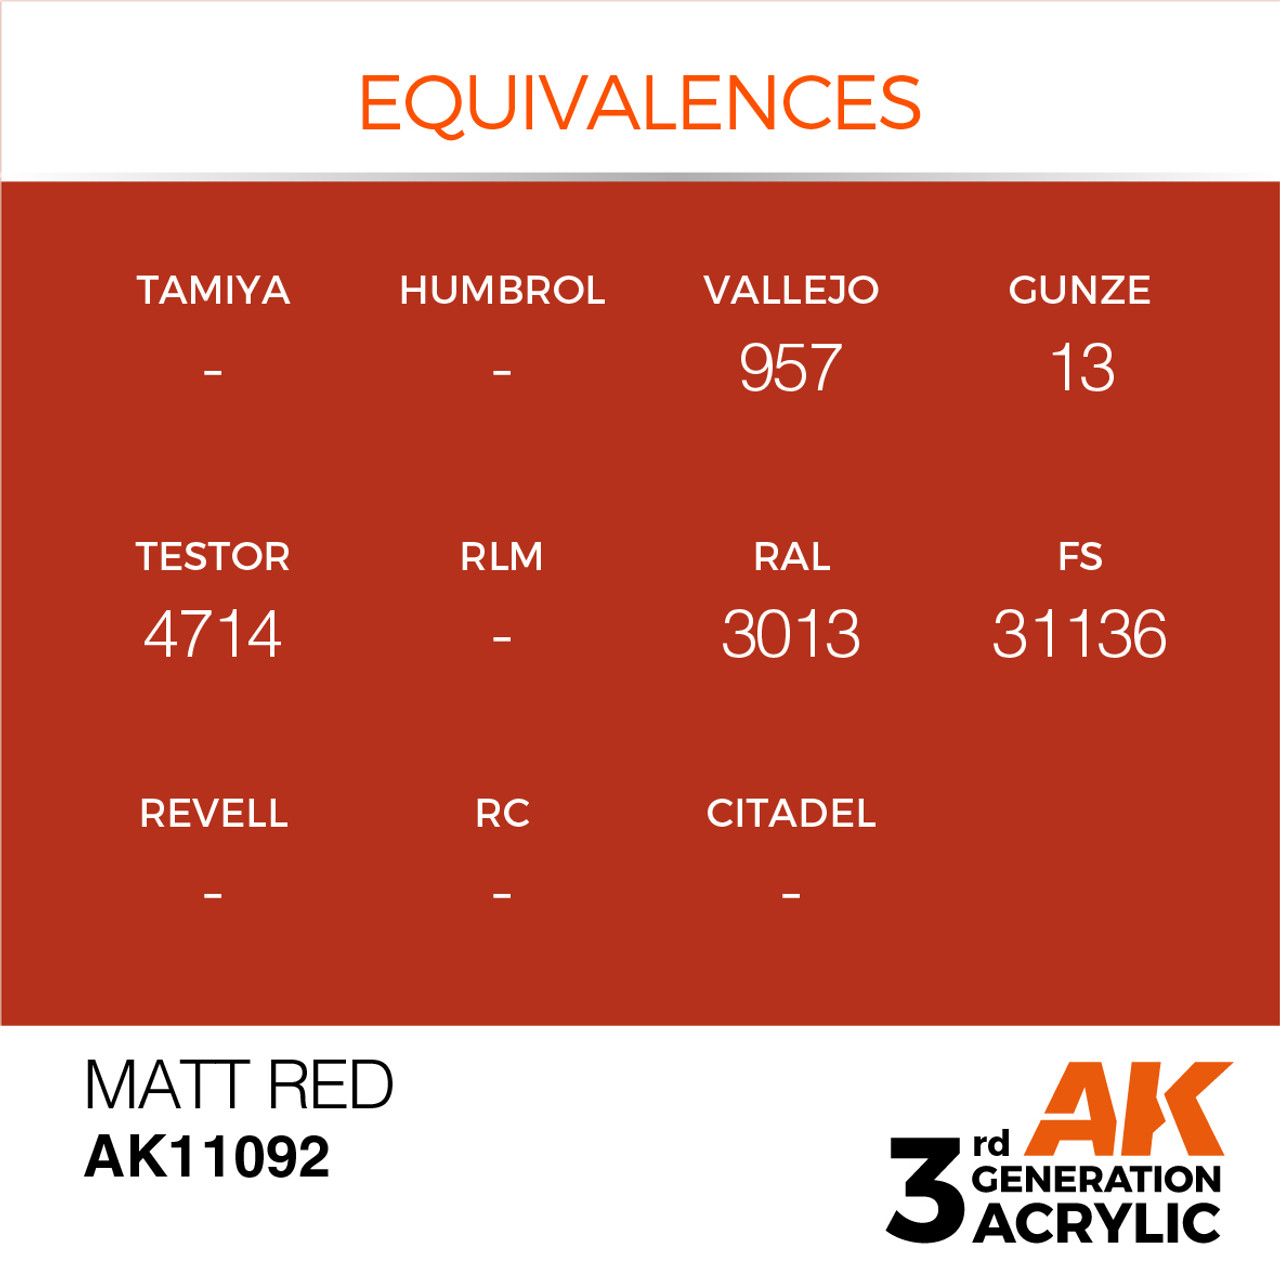 AK Interactive 3G Acrylic Matt Red 17ml